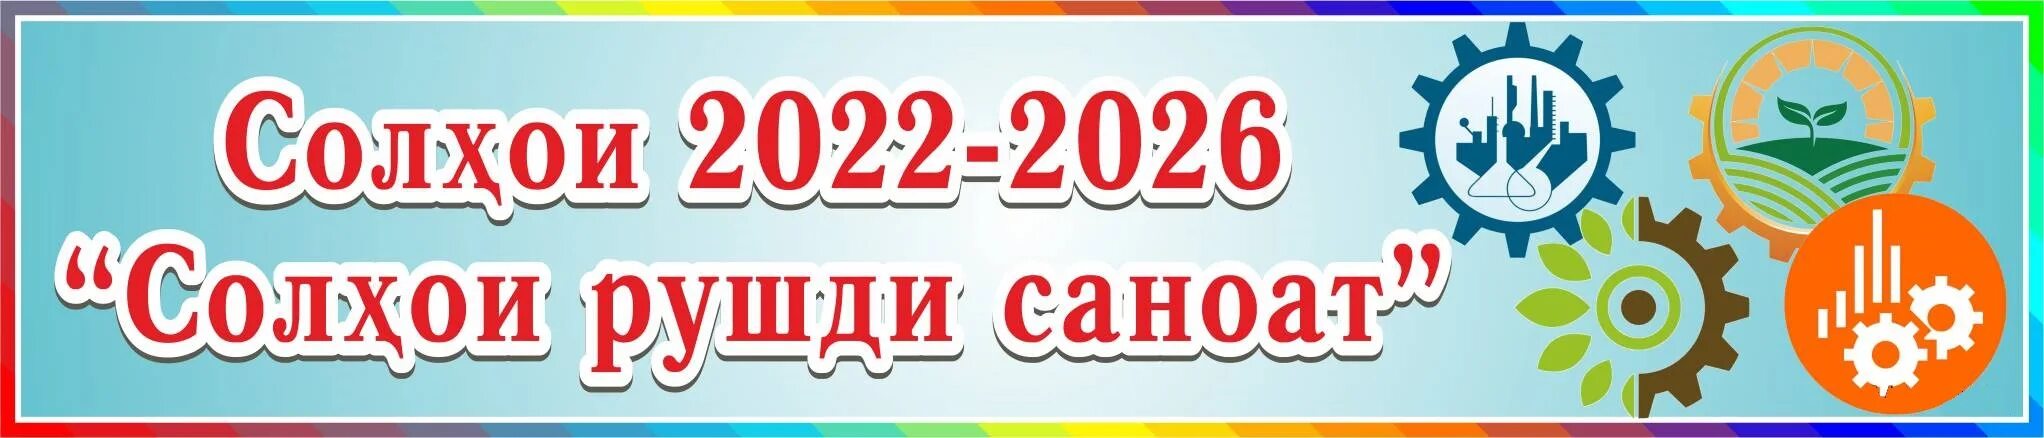 Код 2026. 2022-2026 Саноат. Саноат 2022. 2022-2026 Рушди саноат логотип. Солхои 2022-2026.